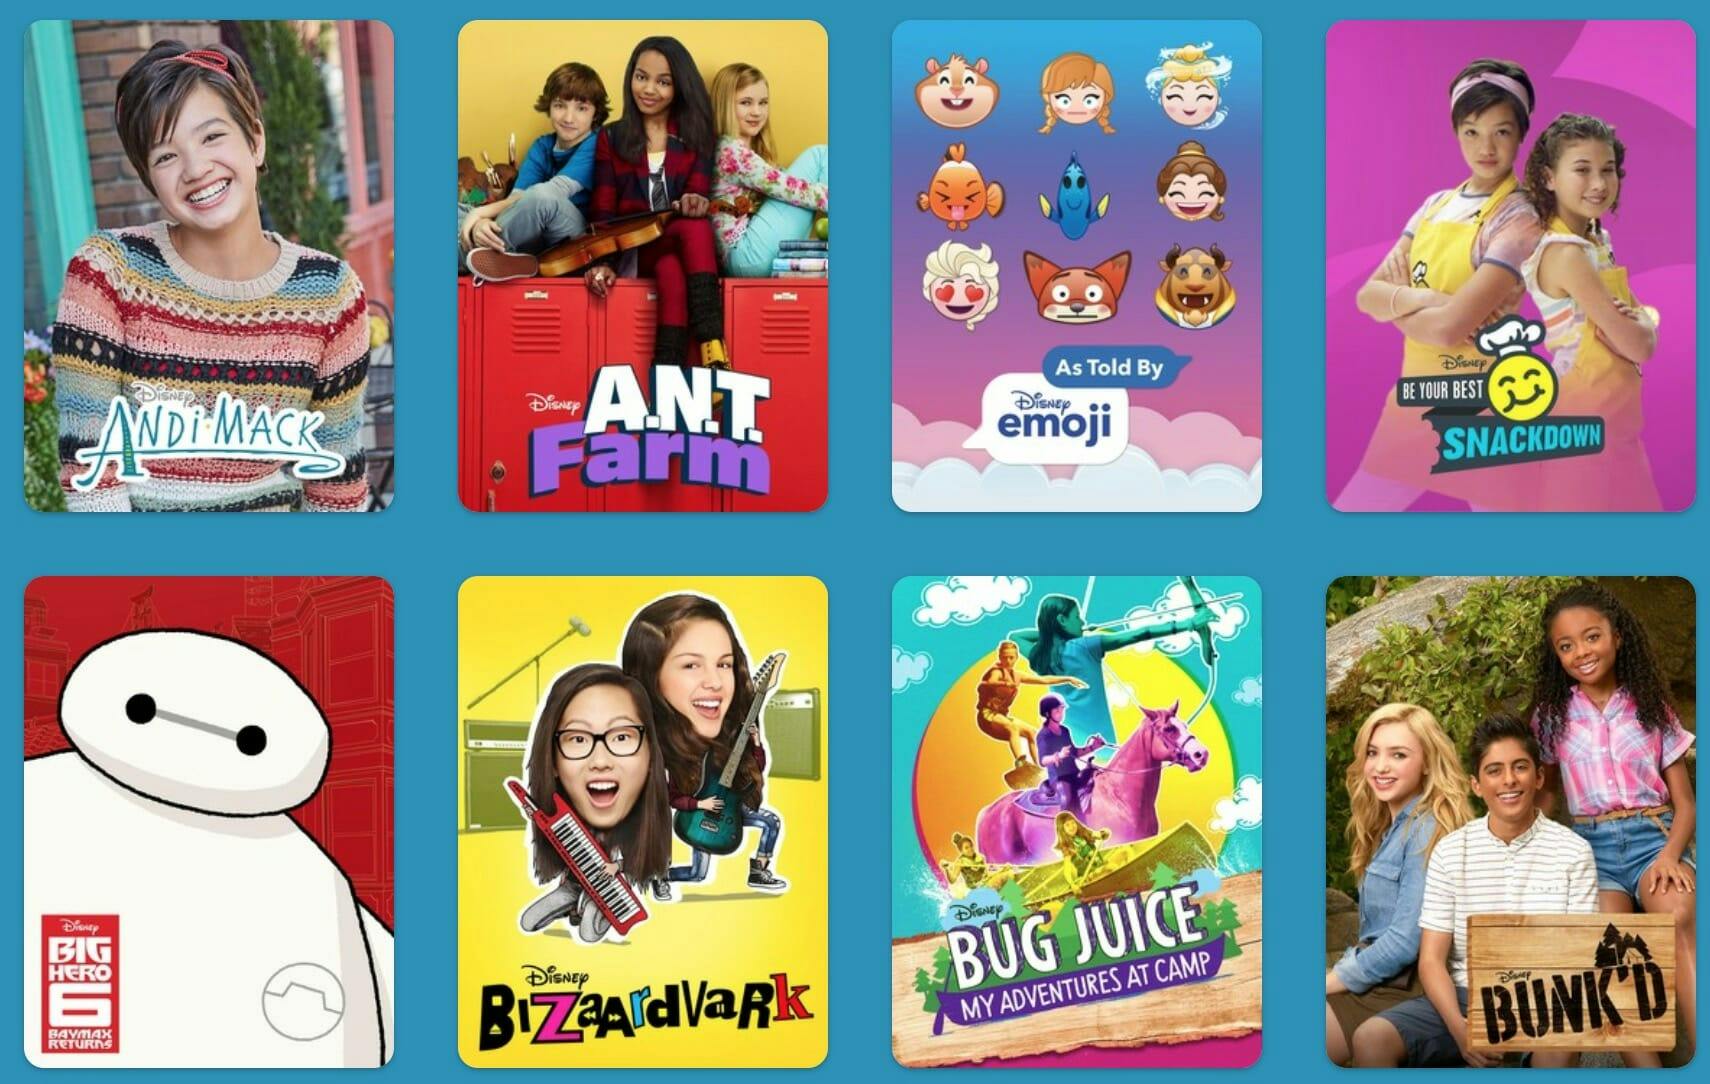 Disney Channel Live Stream 4 Ways to Watch Disney for Free (Dec. 2019)